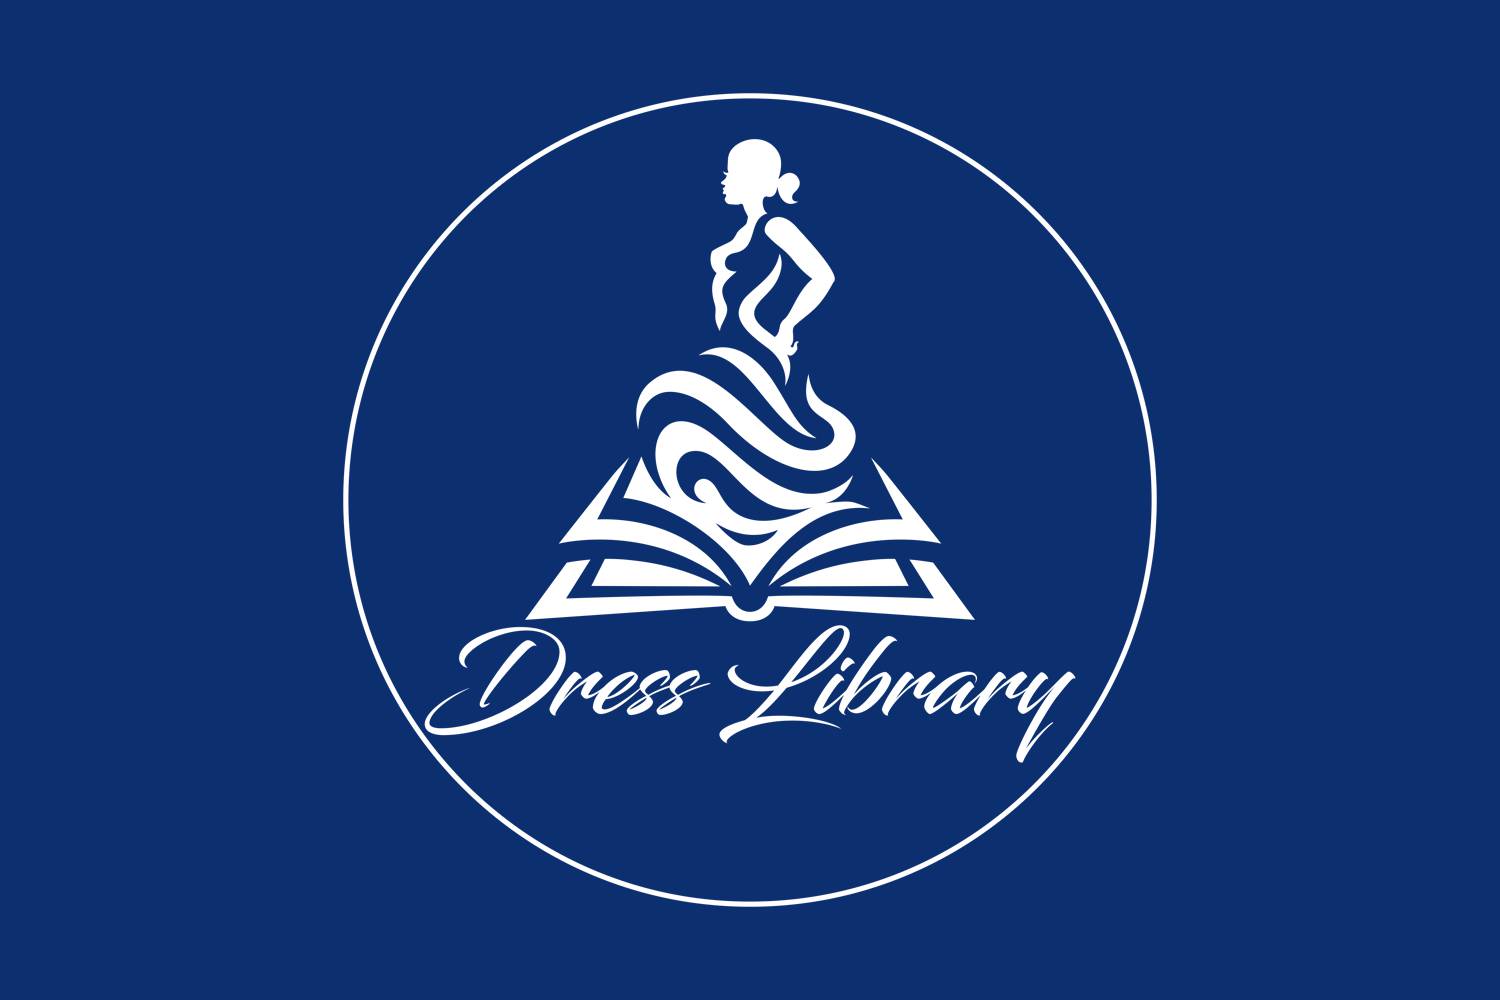 dress-library-logo-blue-image